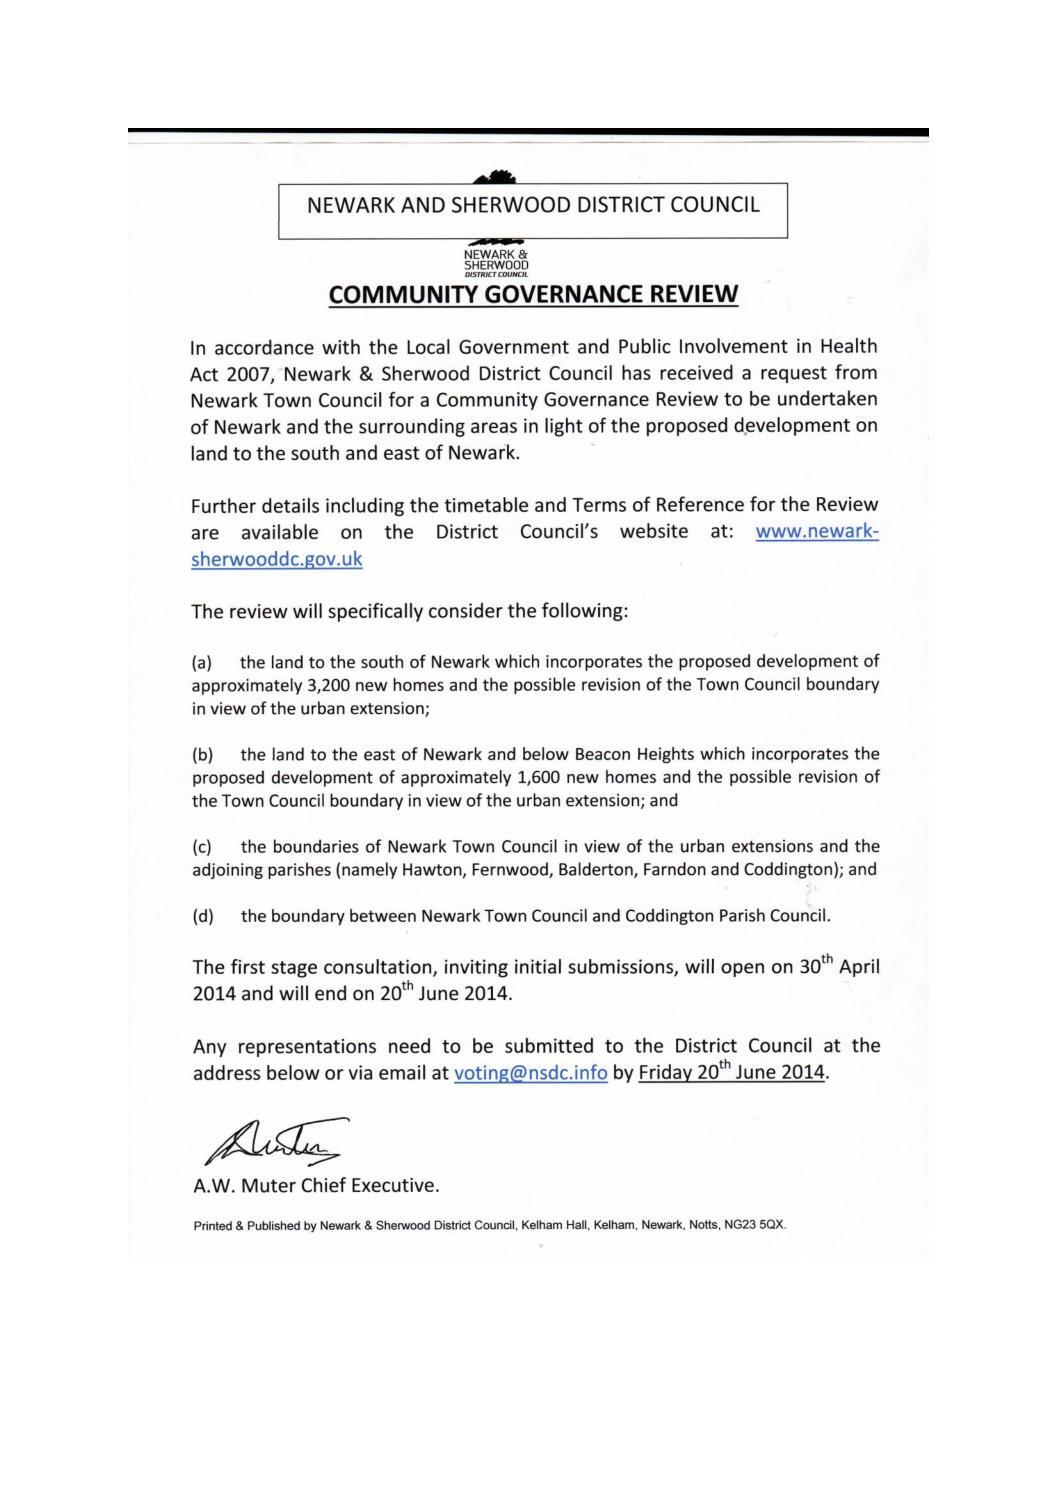 COMMUNITY GOVERNANCE REVIEW CONSULTATION 30 APRIL - 20 JUNE 2014